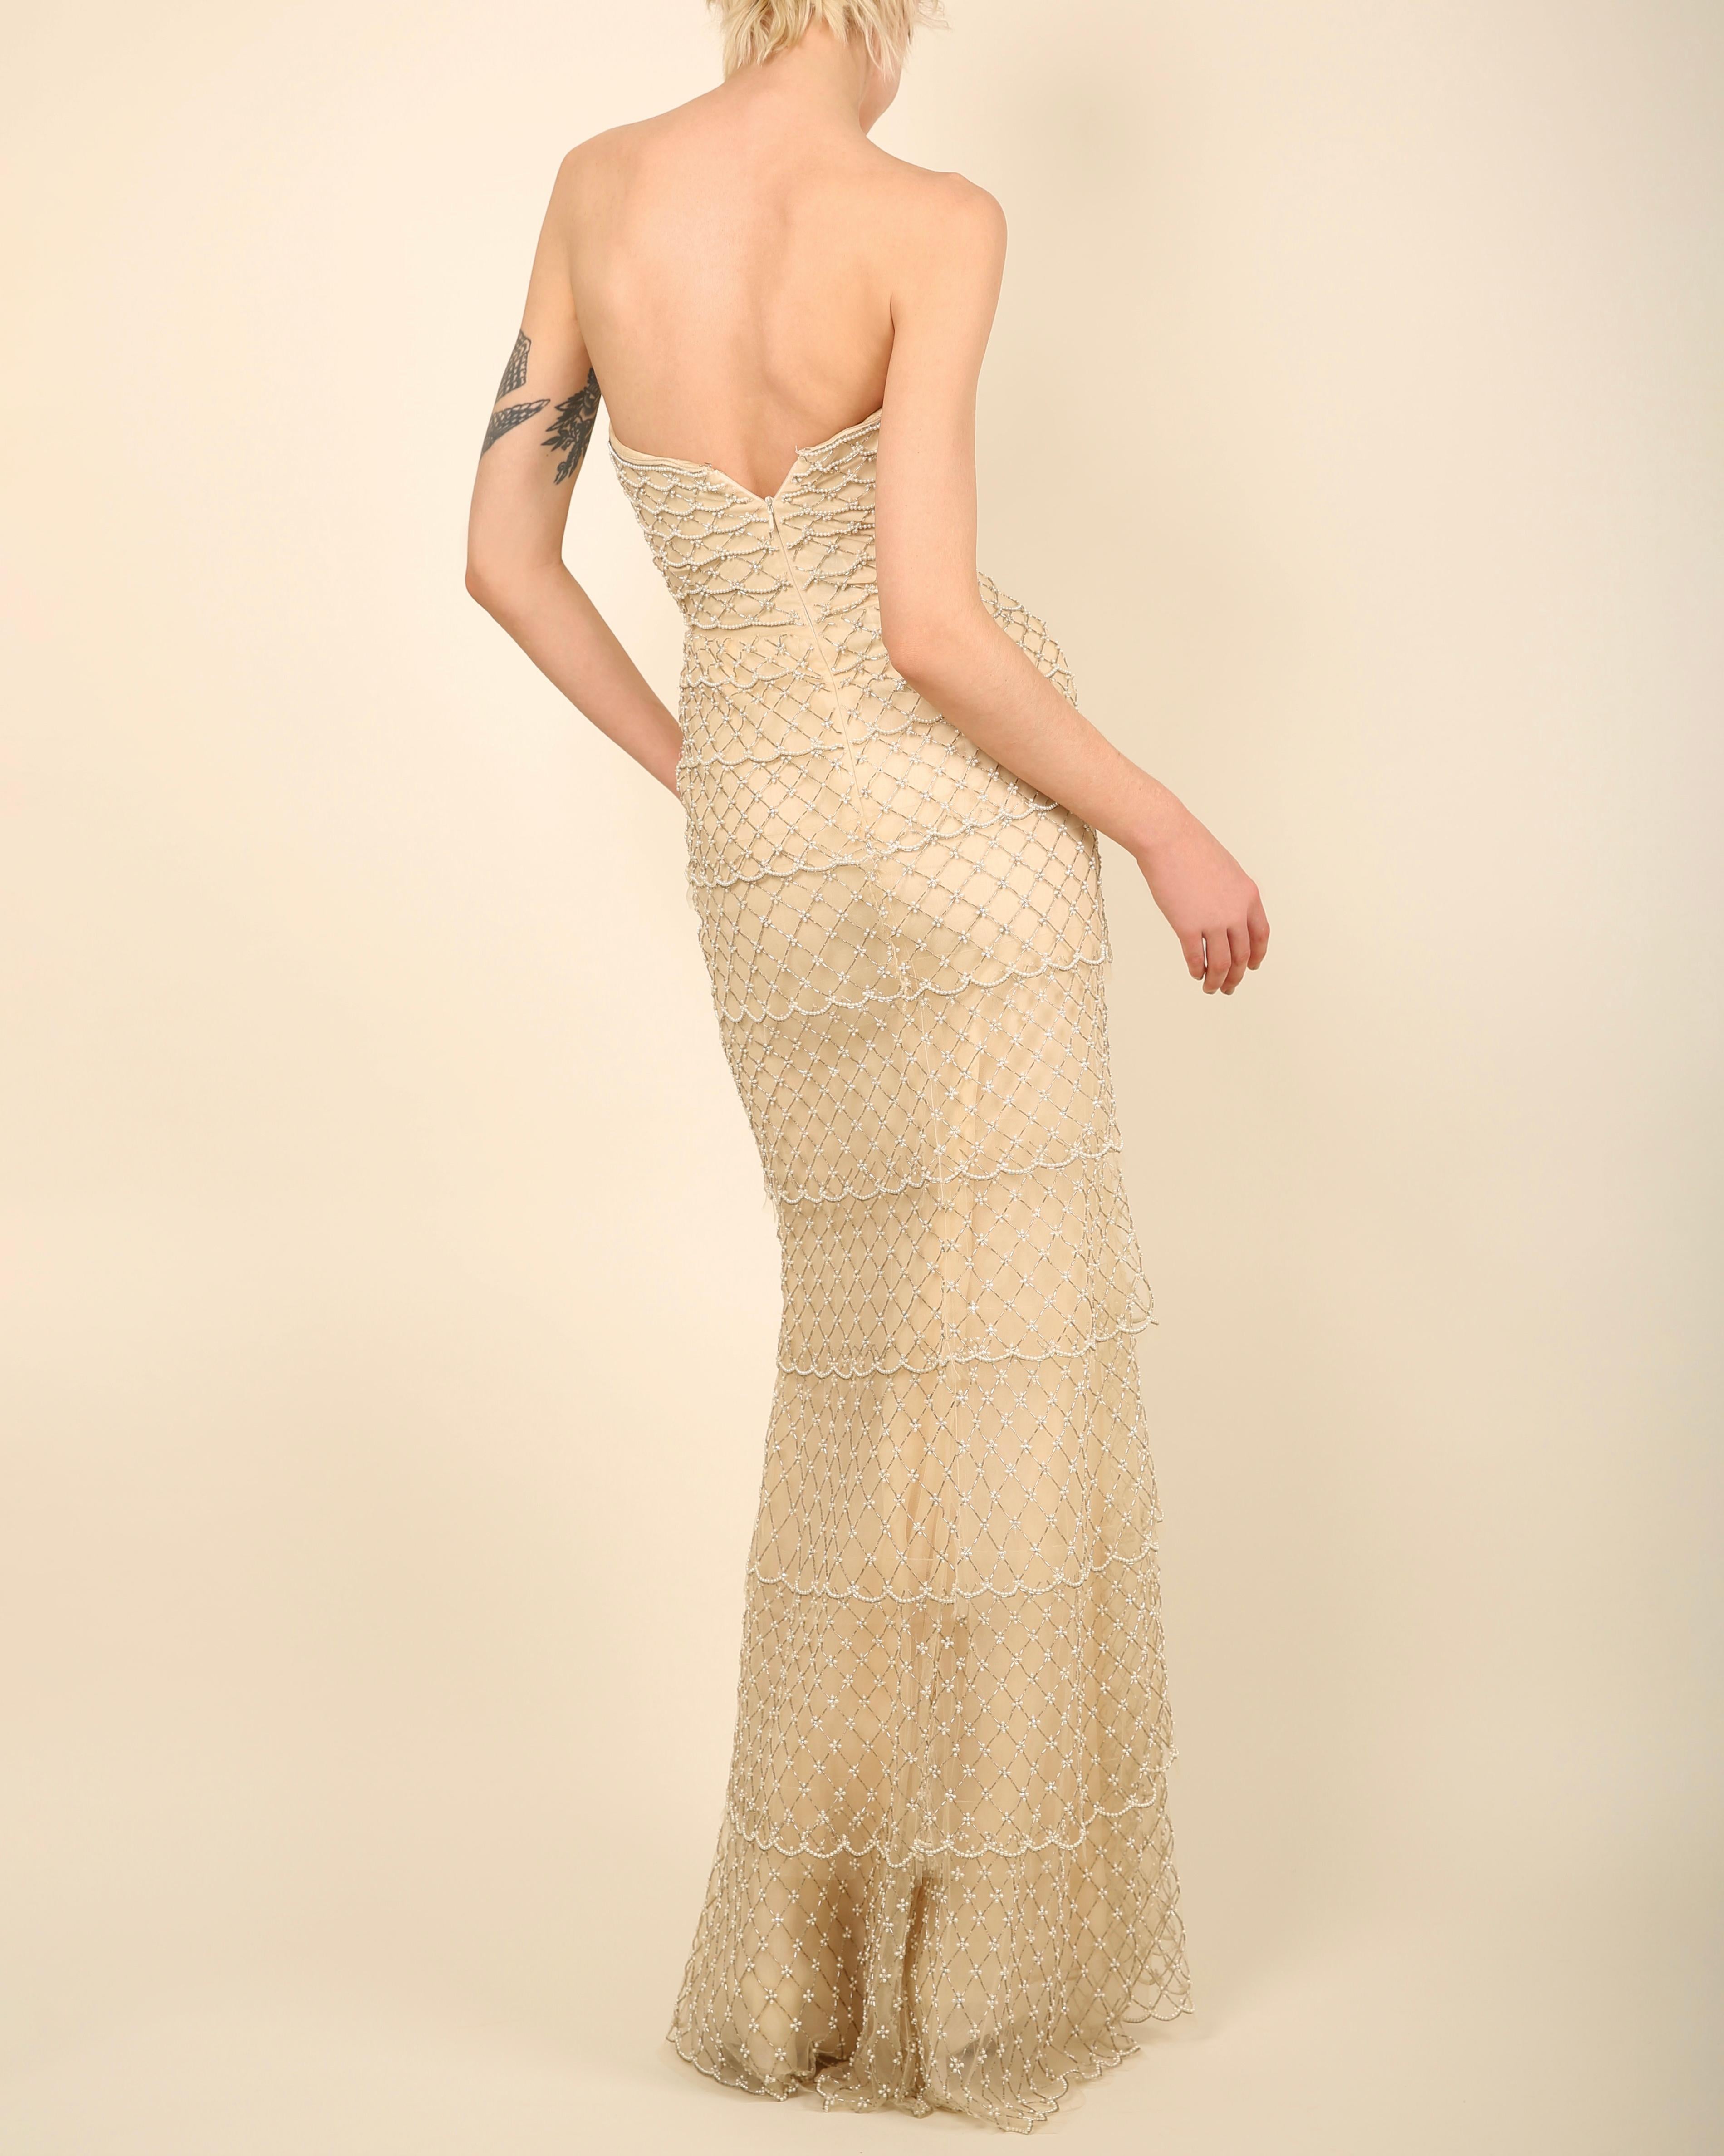 Oscar de la Renta S/S 2014 strapless tiered sheer mesh pearl wedding dress gown For Sale 10